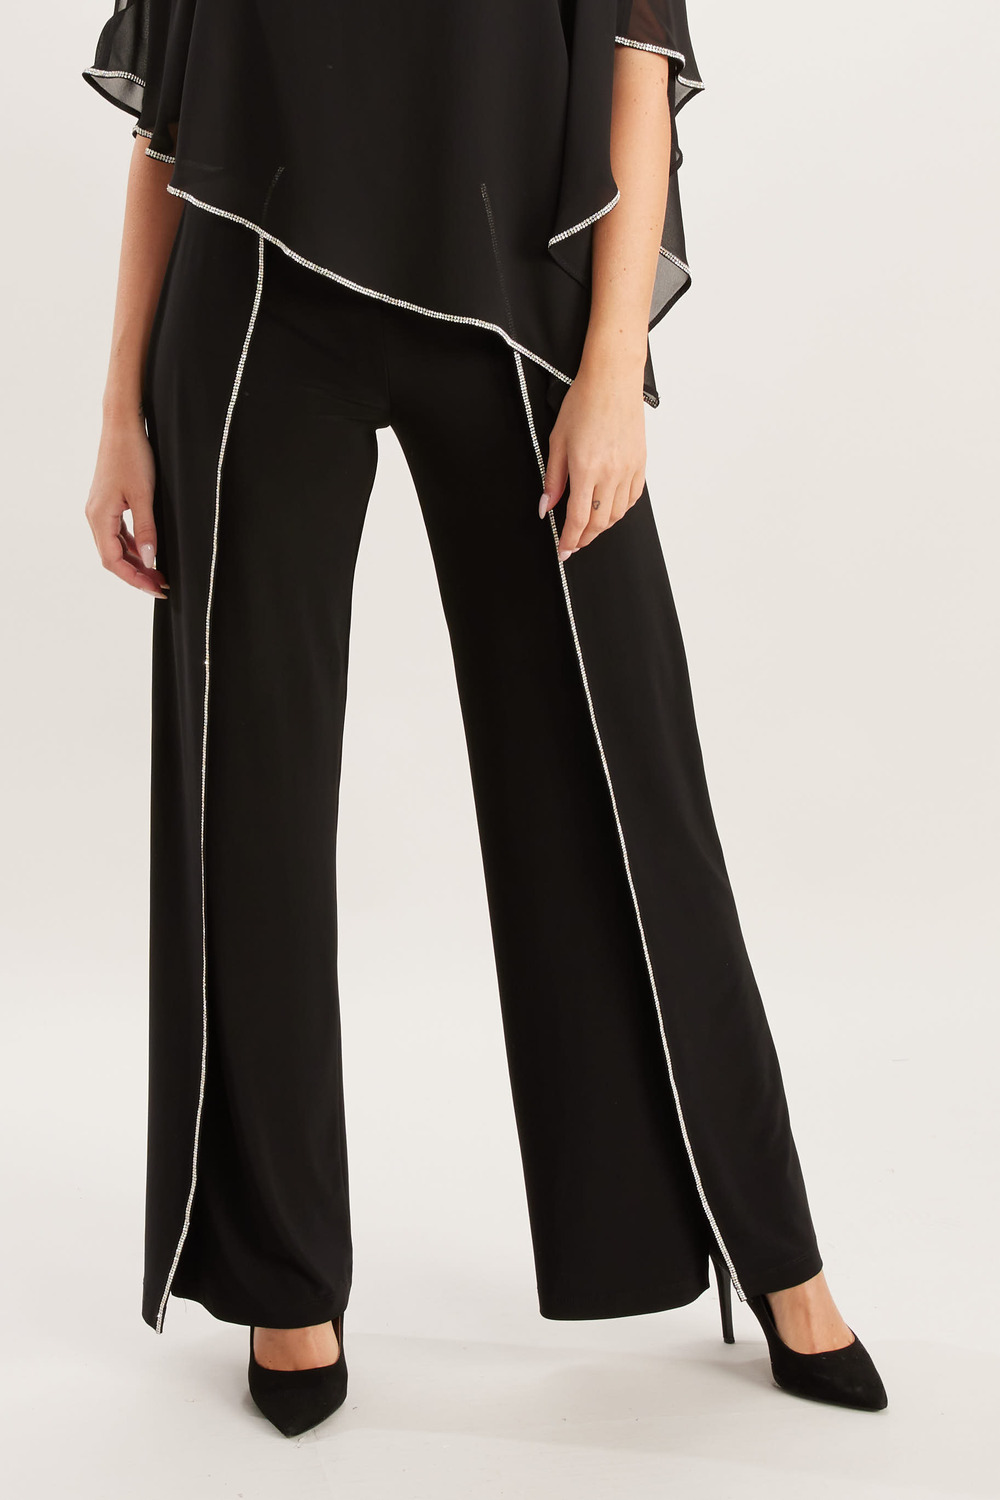 Sequin pant style 218004. Black